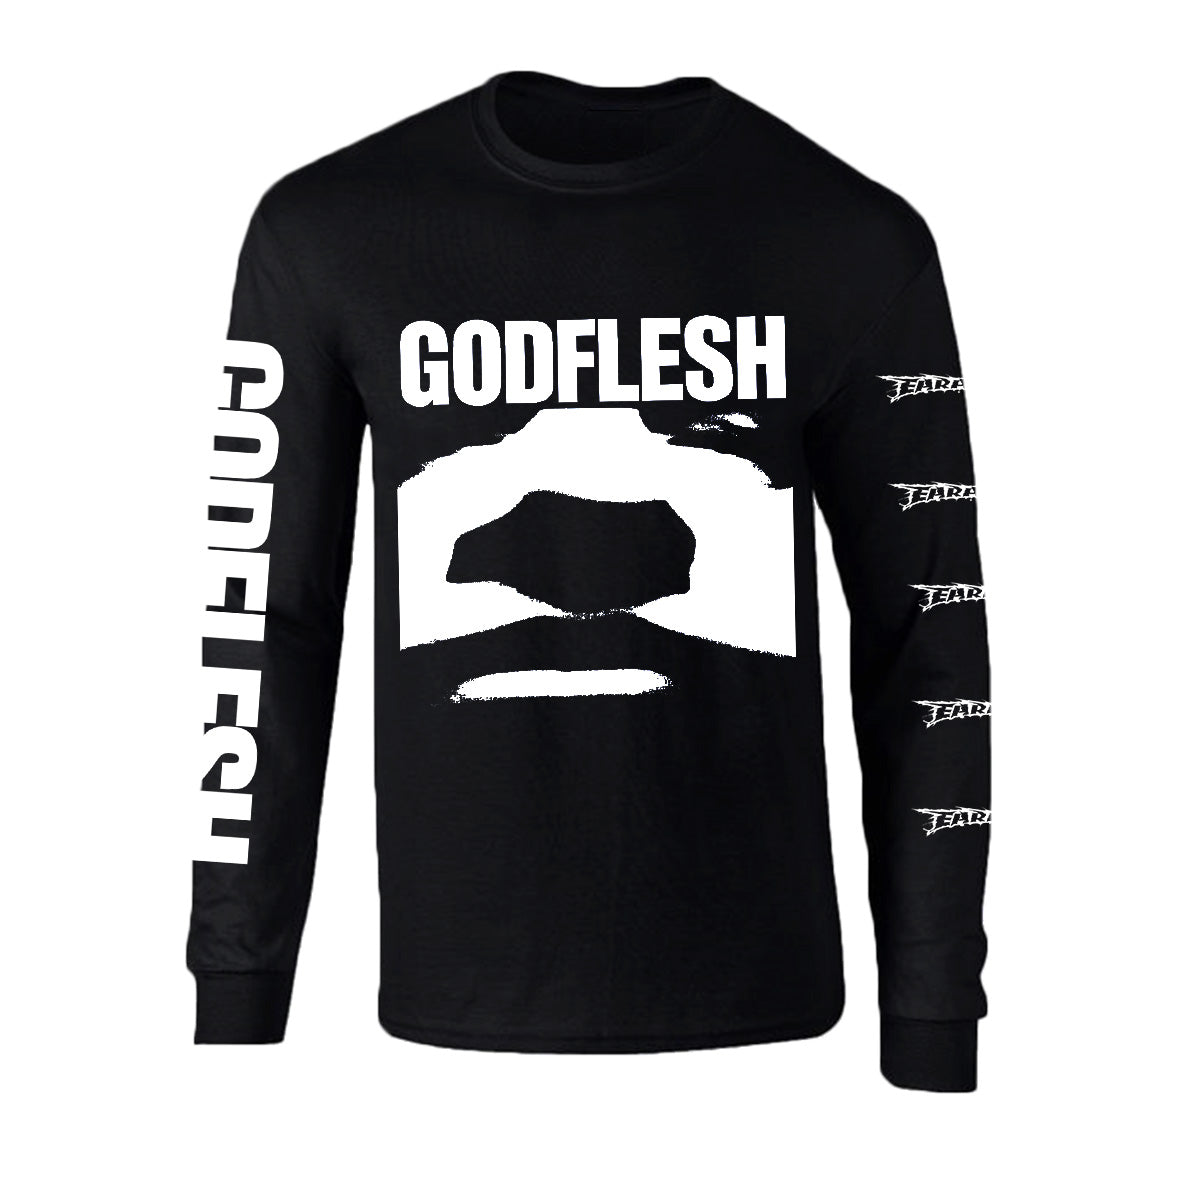 Godflesh "Godflesh" Long Sleeve T shirt